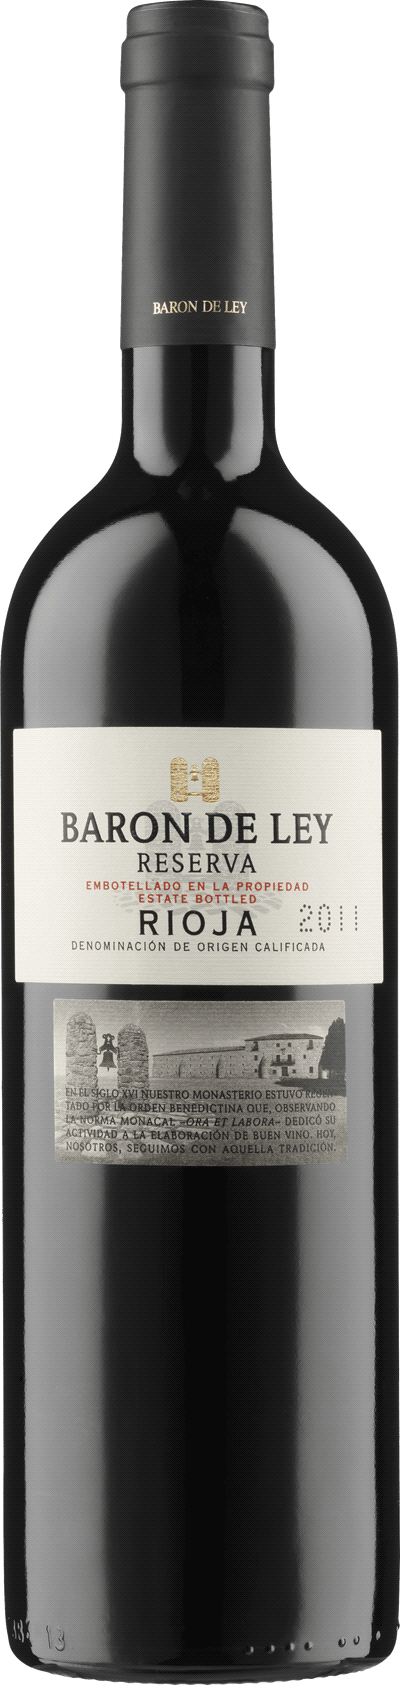 Baron de Ley Reserva 2018, 750 cl, 125 kr - Cocktailguiden